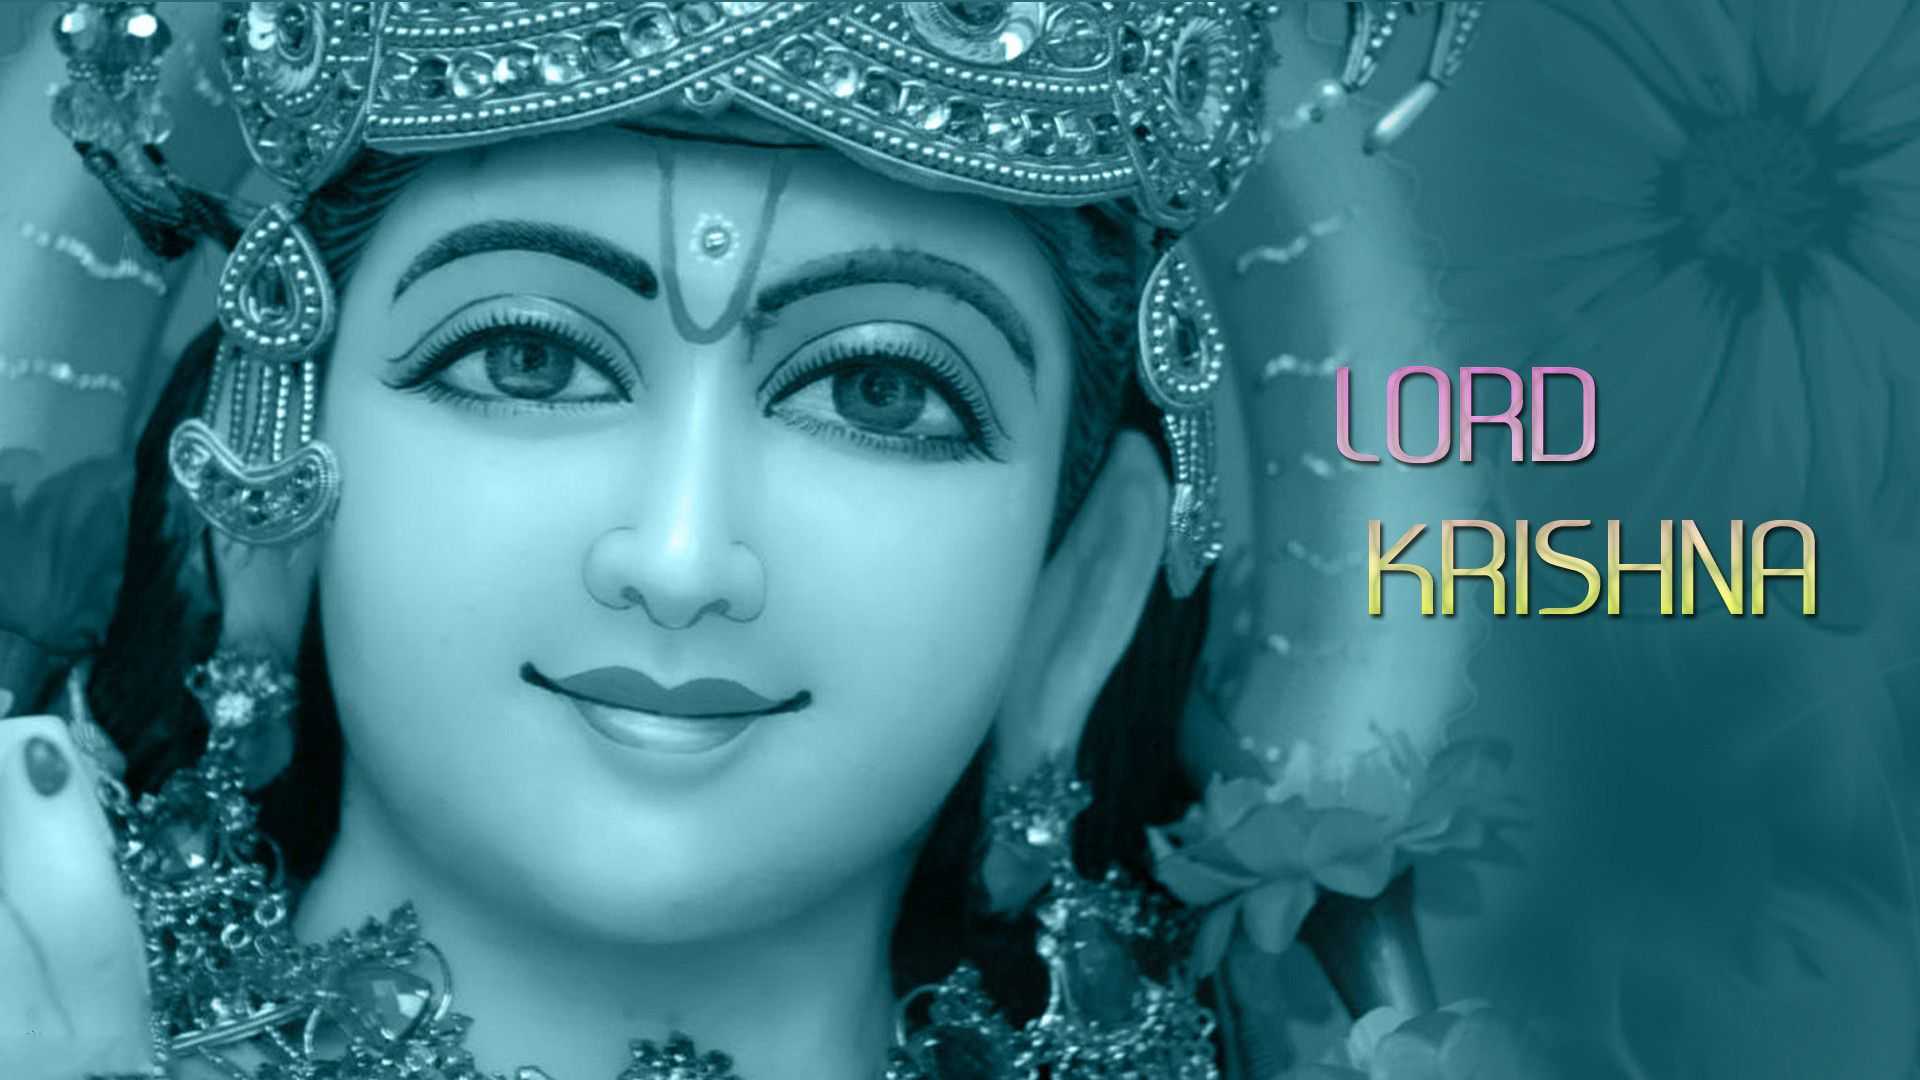 Lord Krishna Images 2017 Childhood hd 1080p free download - Todayz News